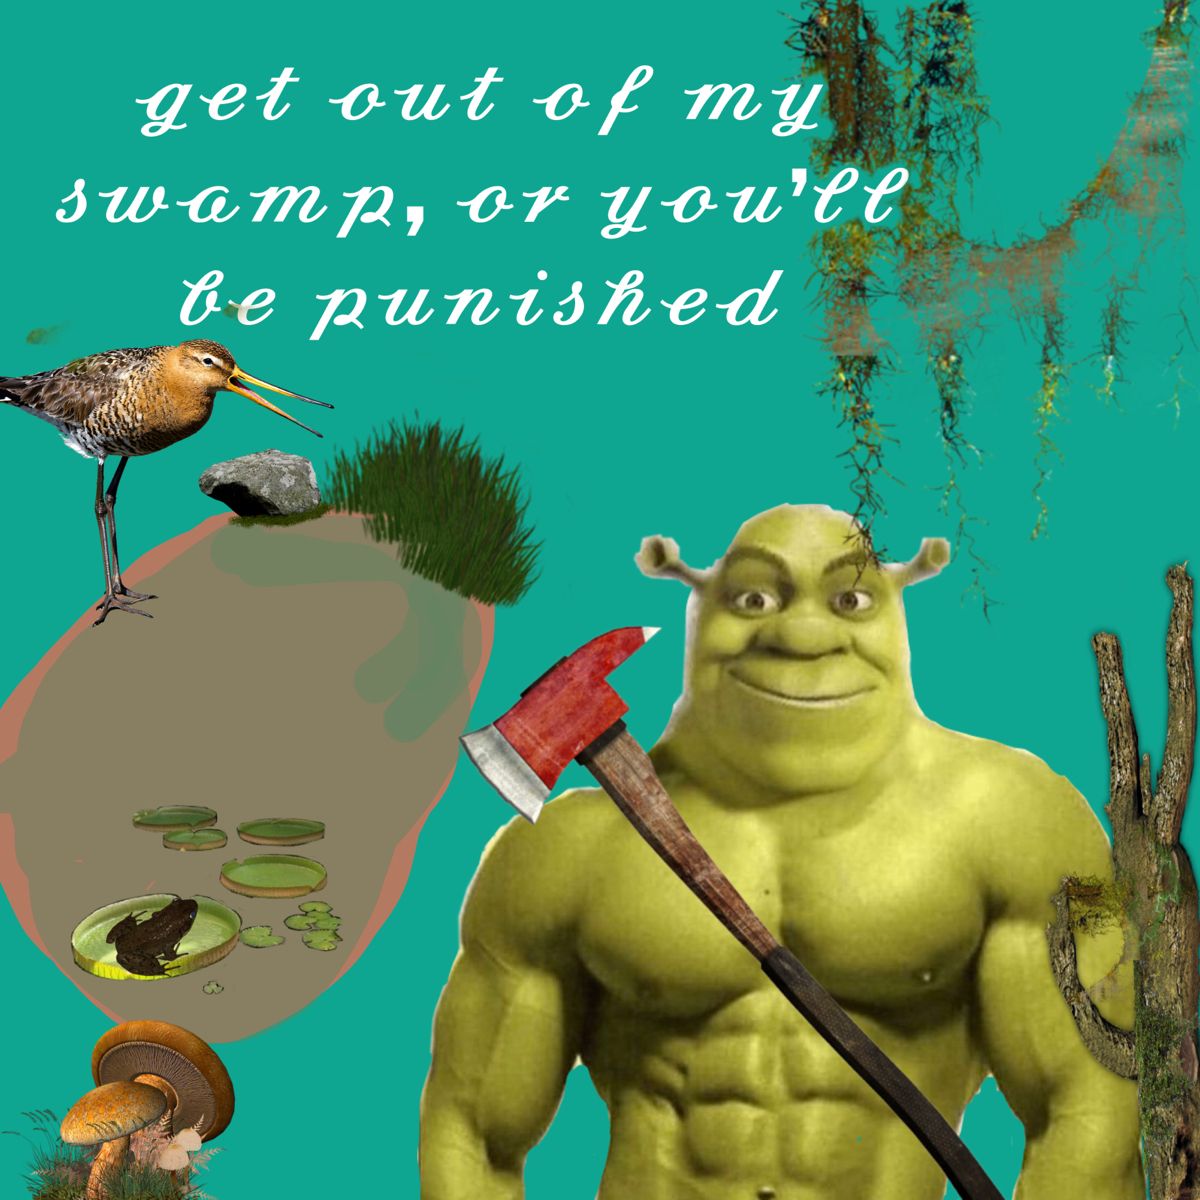 Shrek Meme Wallpaper 73806 1920x1080px